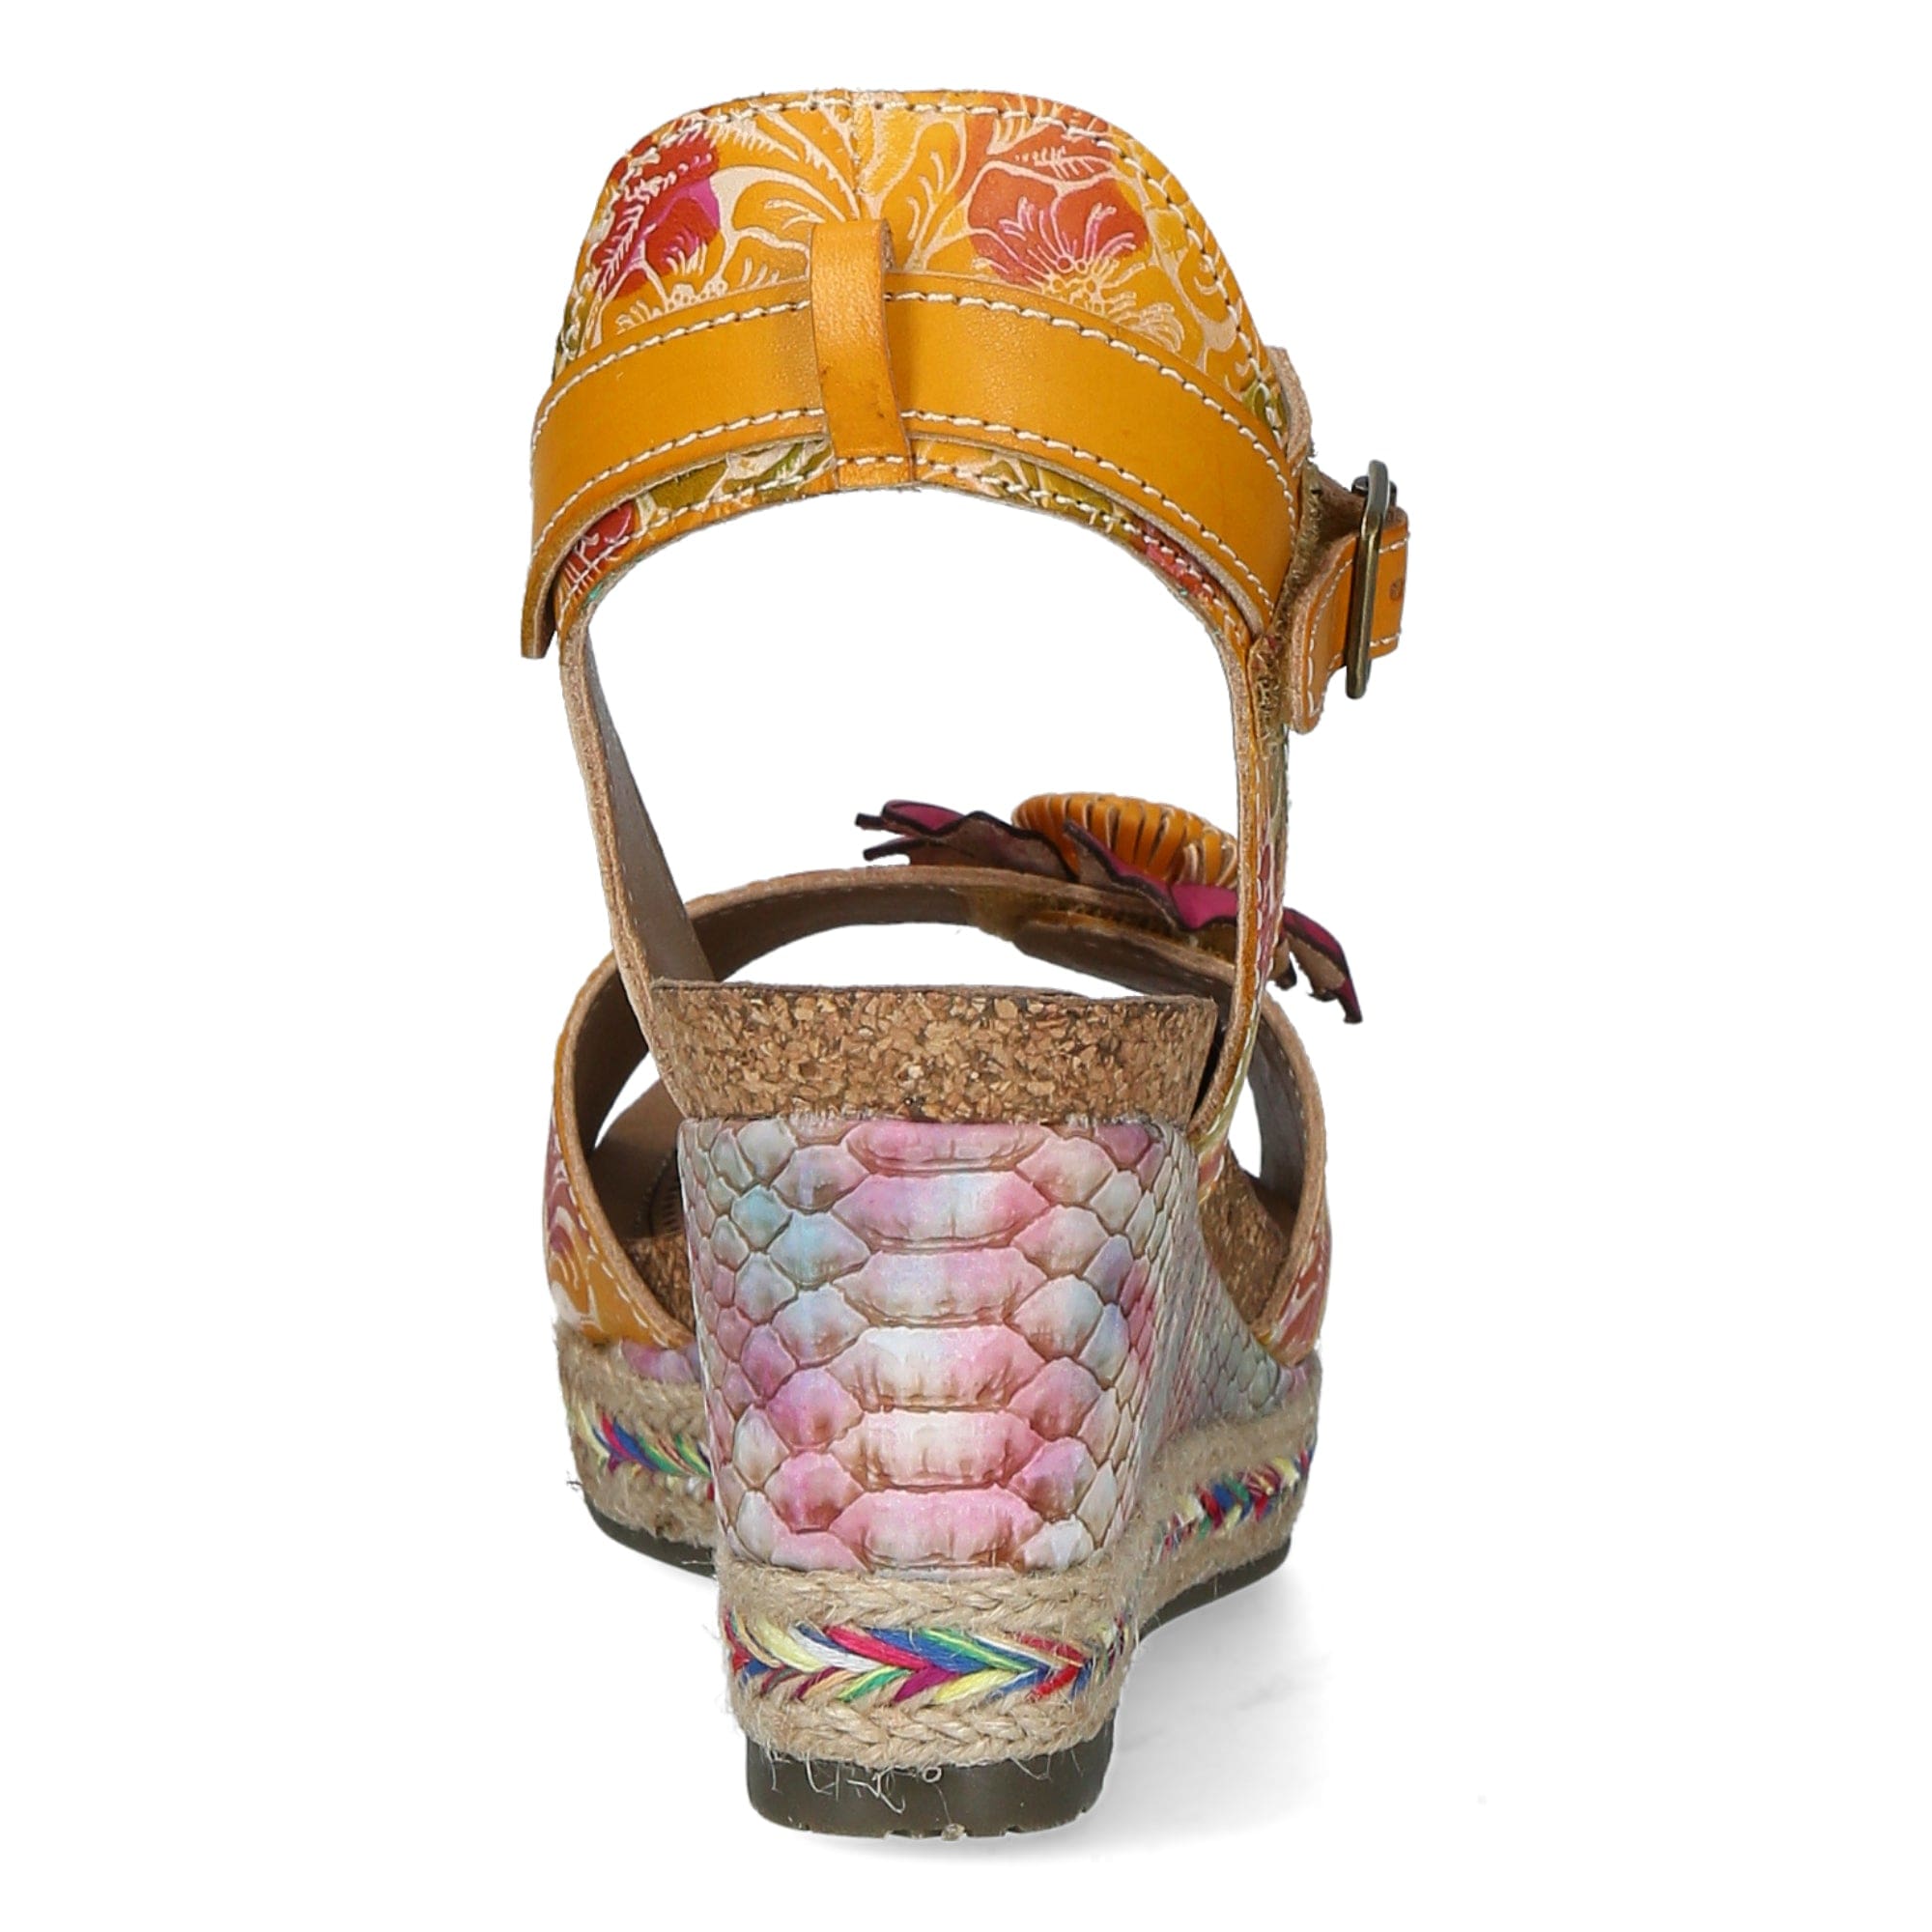 Chaussure FACYO06 - Sandale